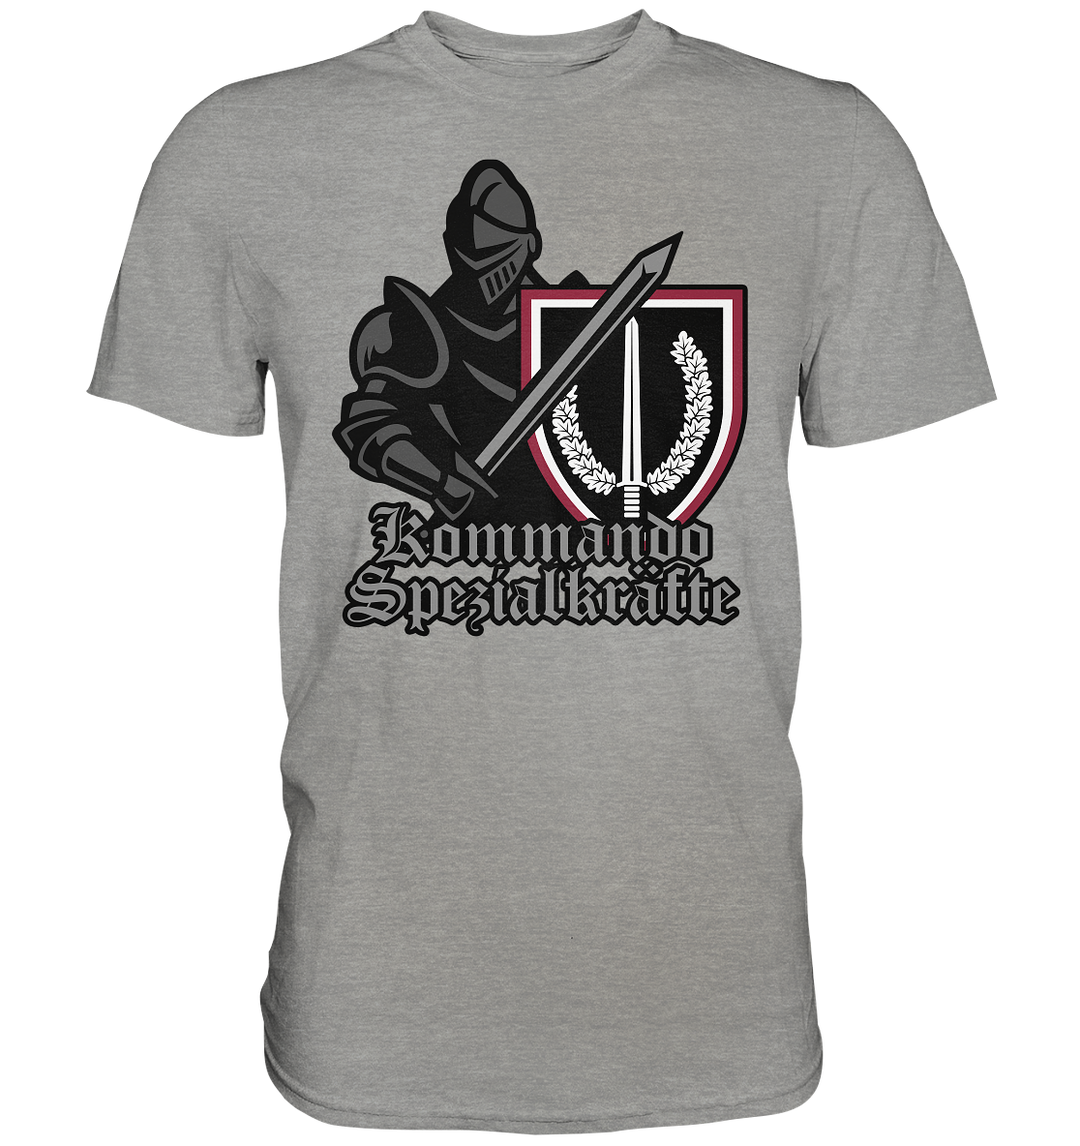 "Kommando Spezialkräfte - Ritter" - Premium Shirt